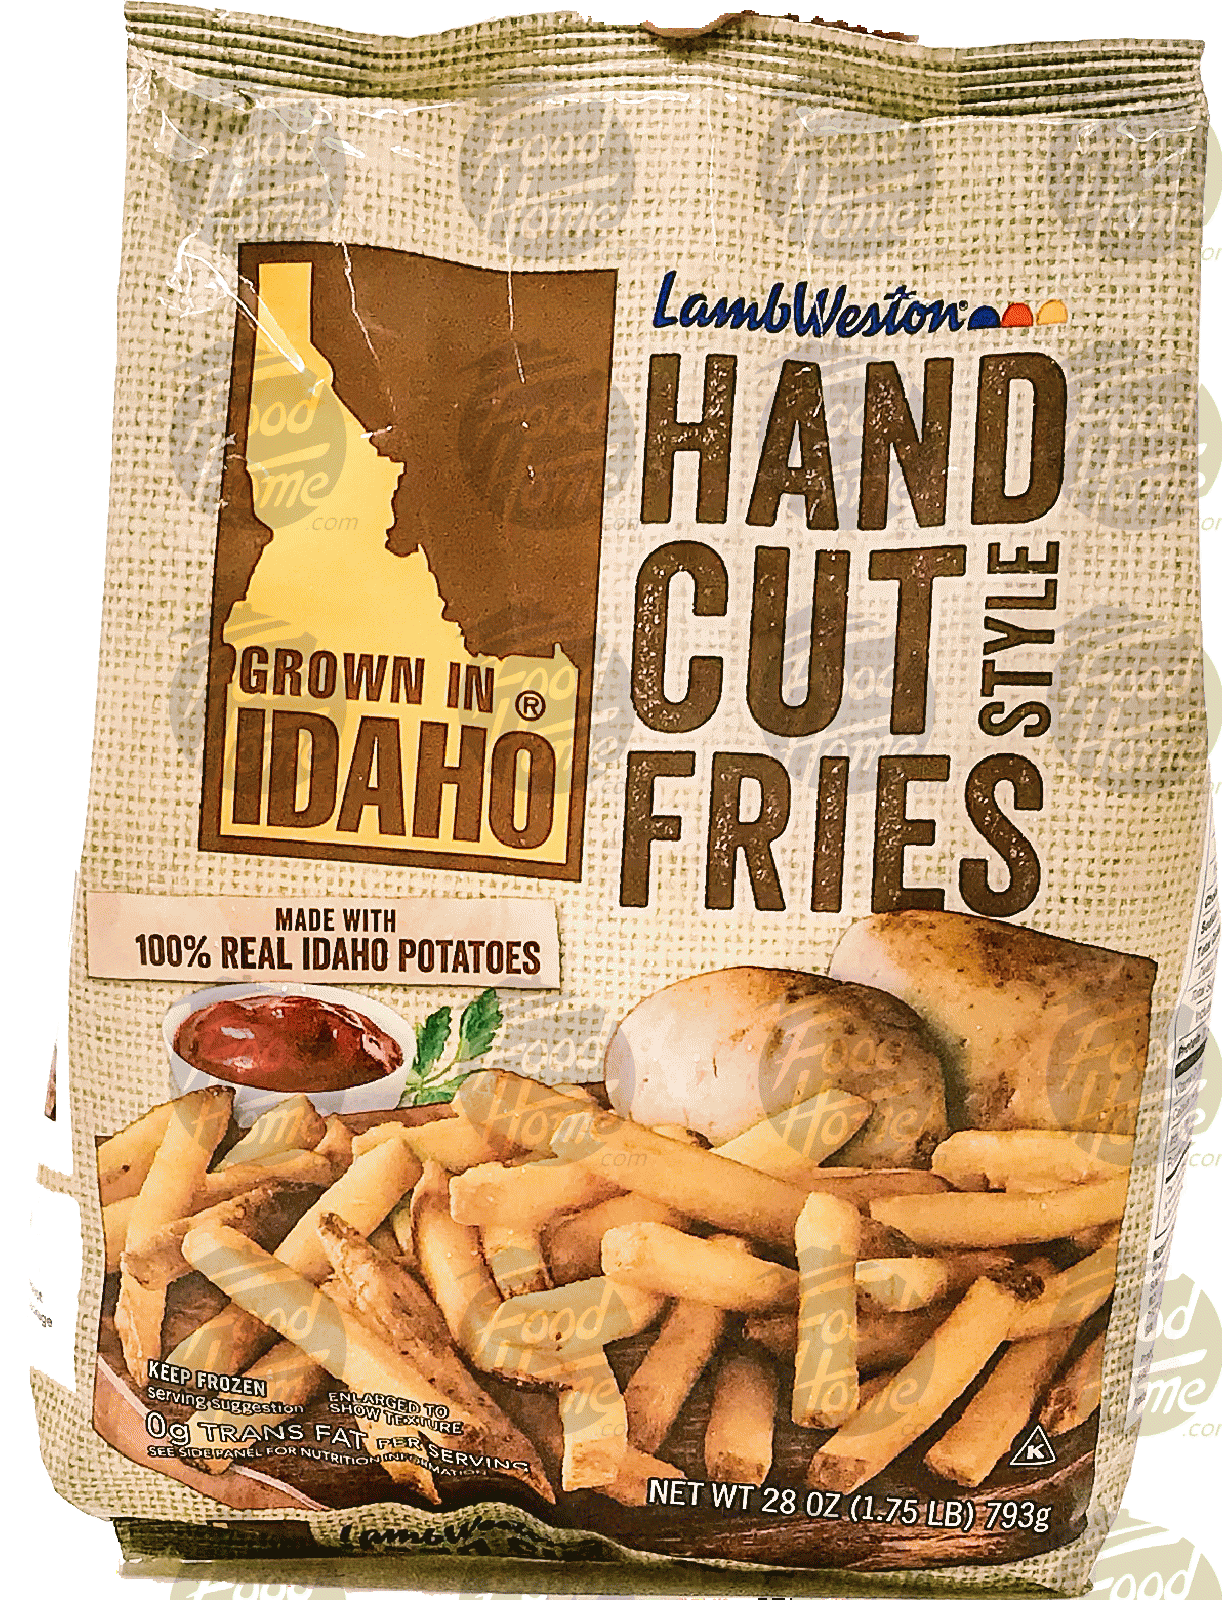 Hand Cut Style Fries - Grown In Idaho